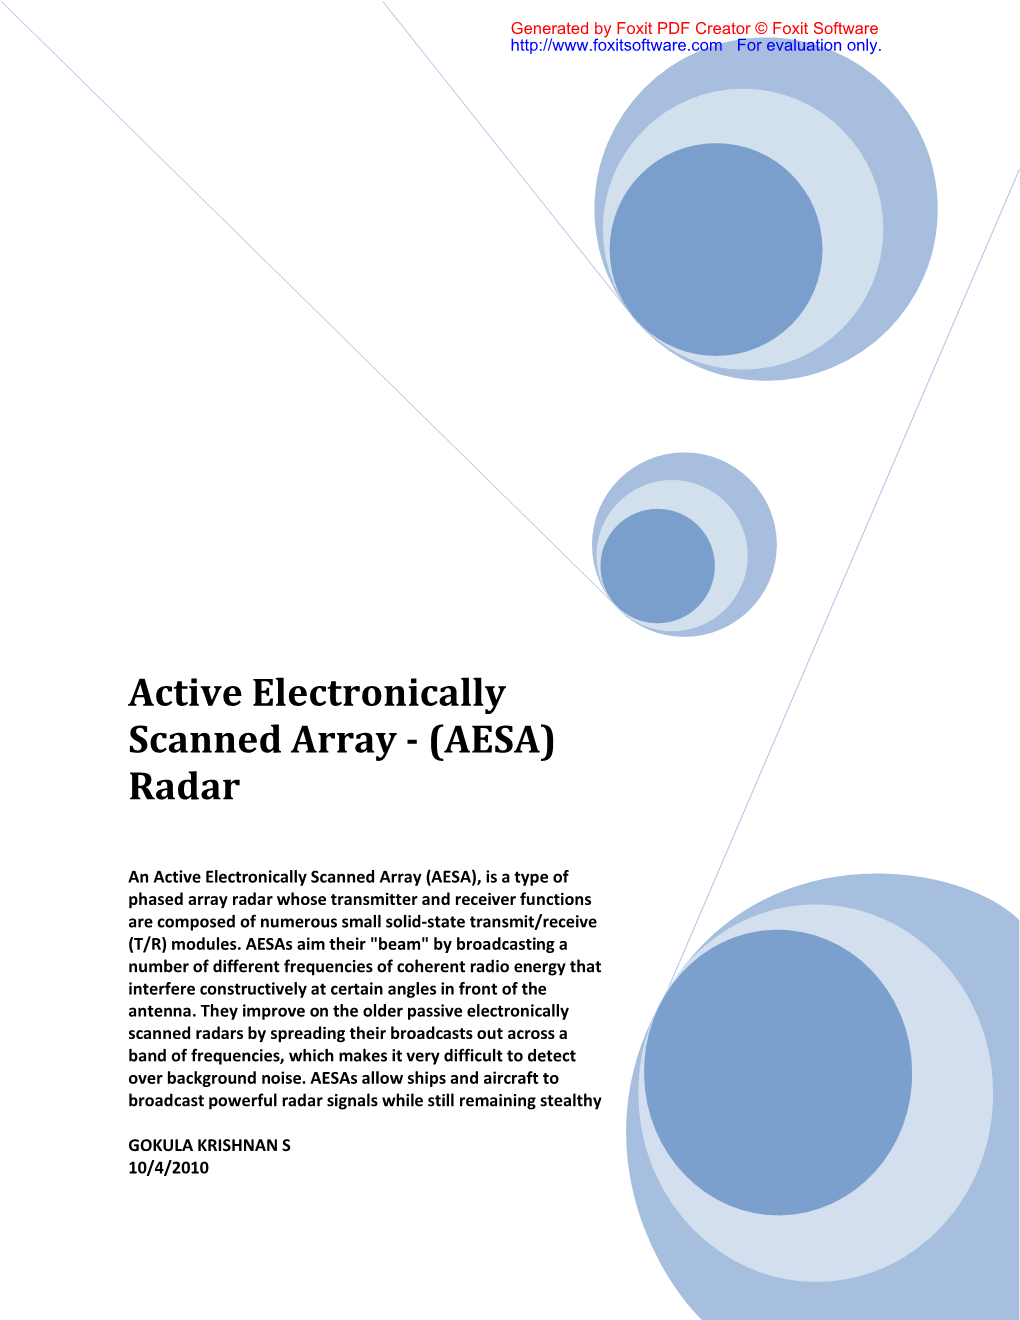 Active Electronically Scanned Array - (AESA) Radar